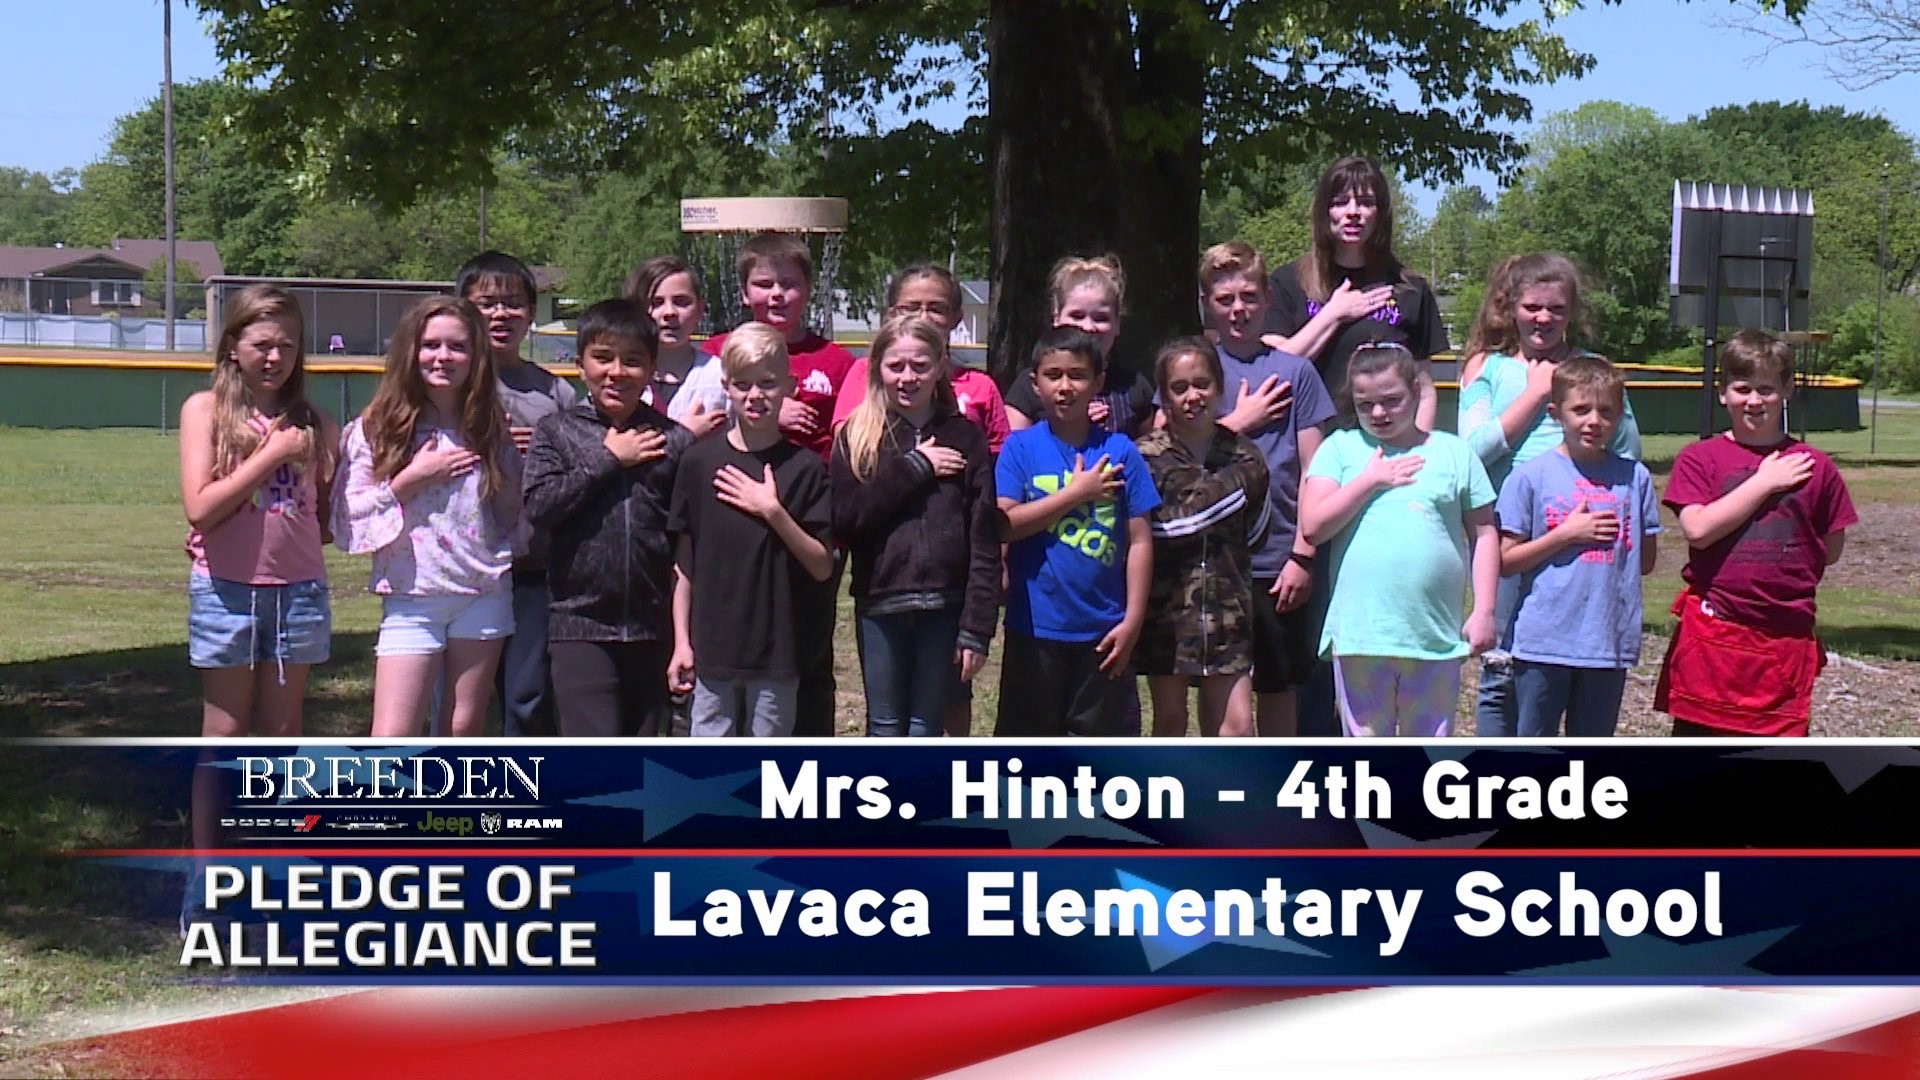 Mrs. Hinton  4th Grade Lavaca Elementary School